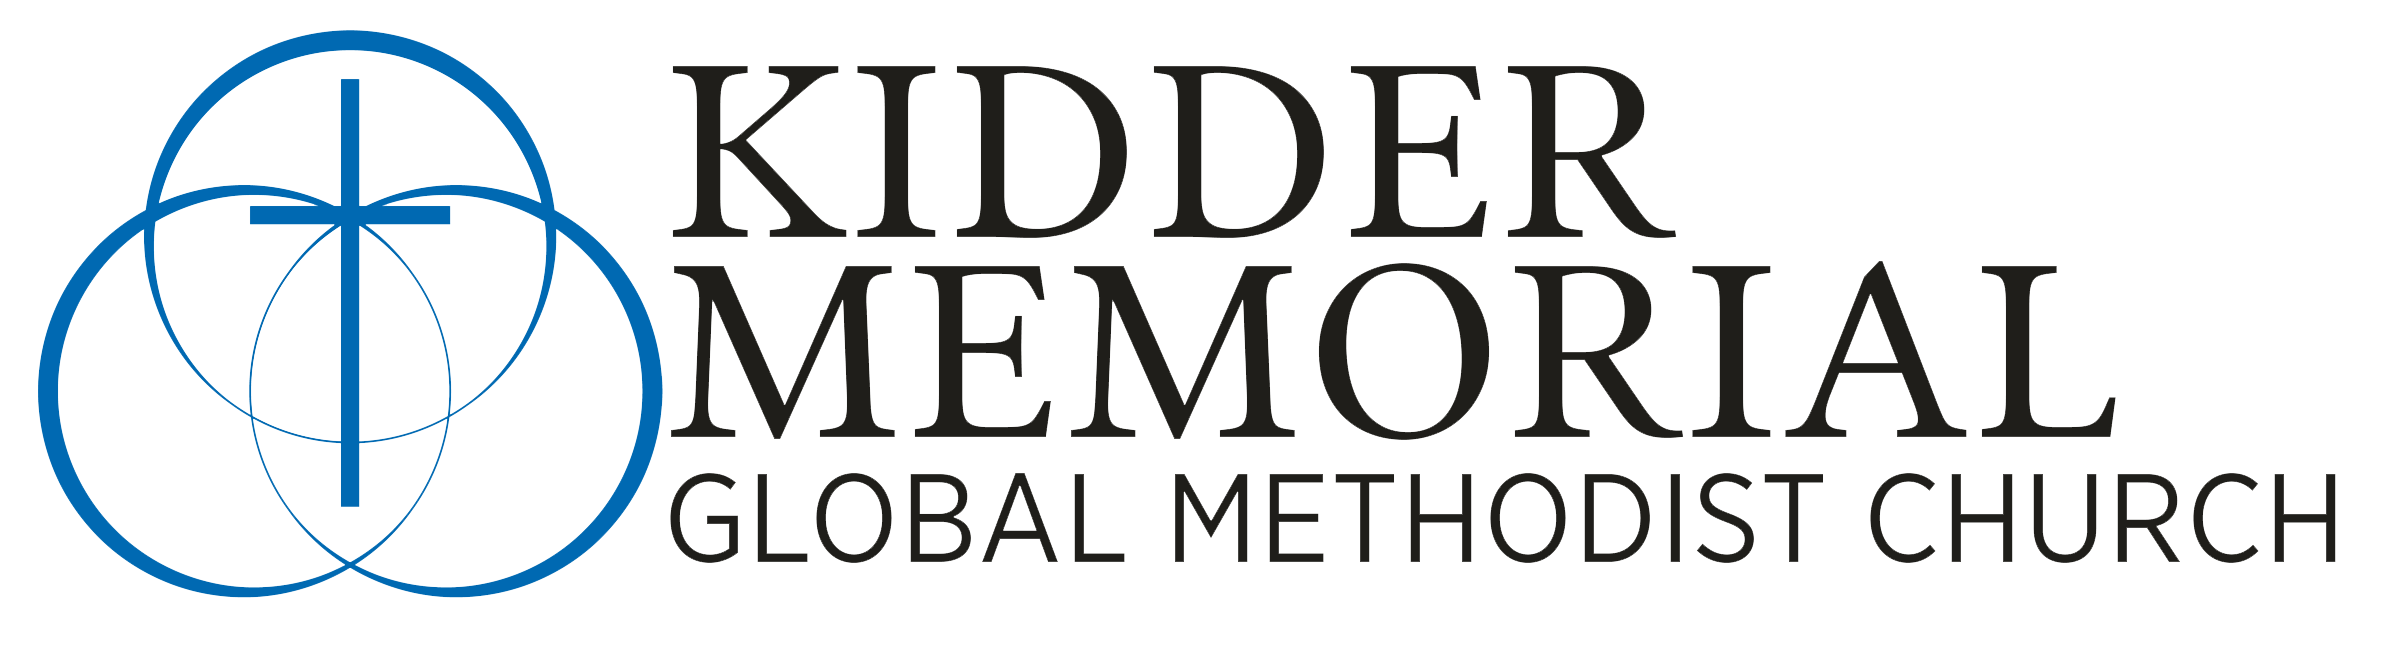 Kidder Memorial Global Methodist Church